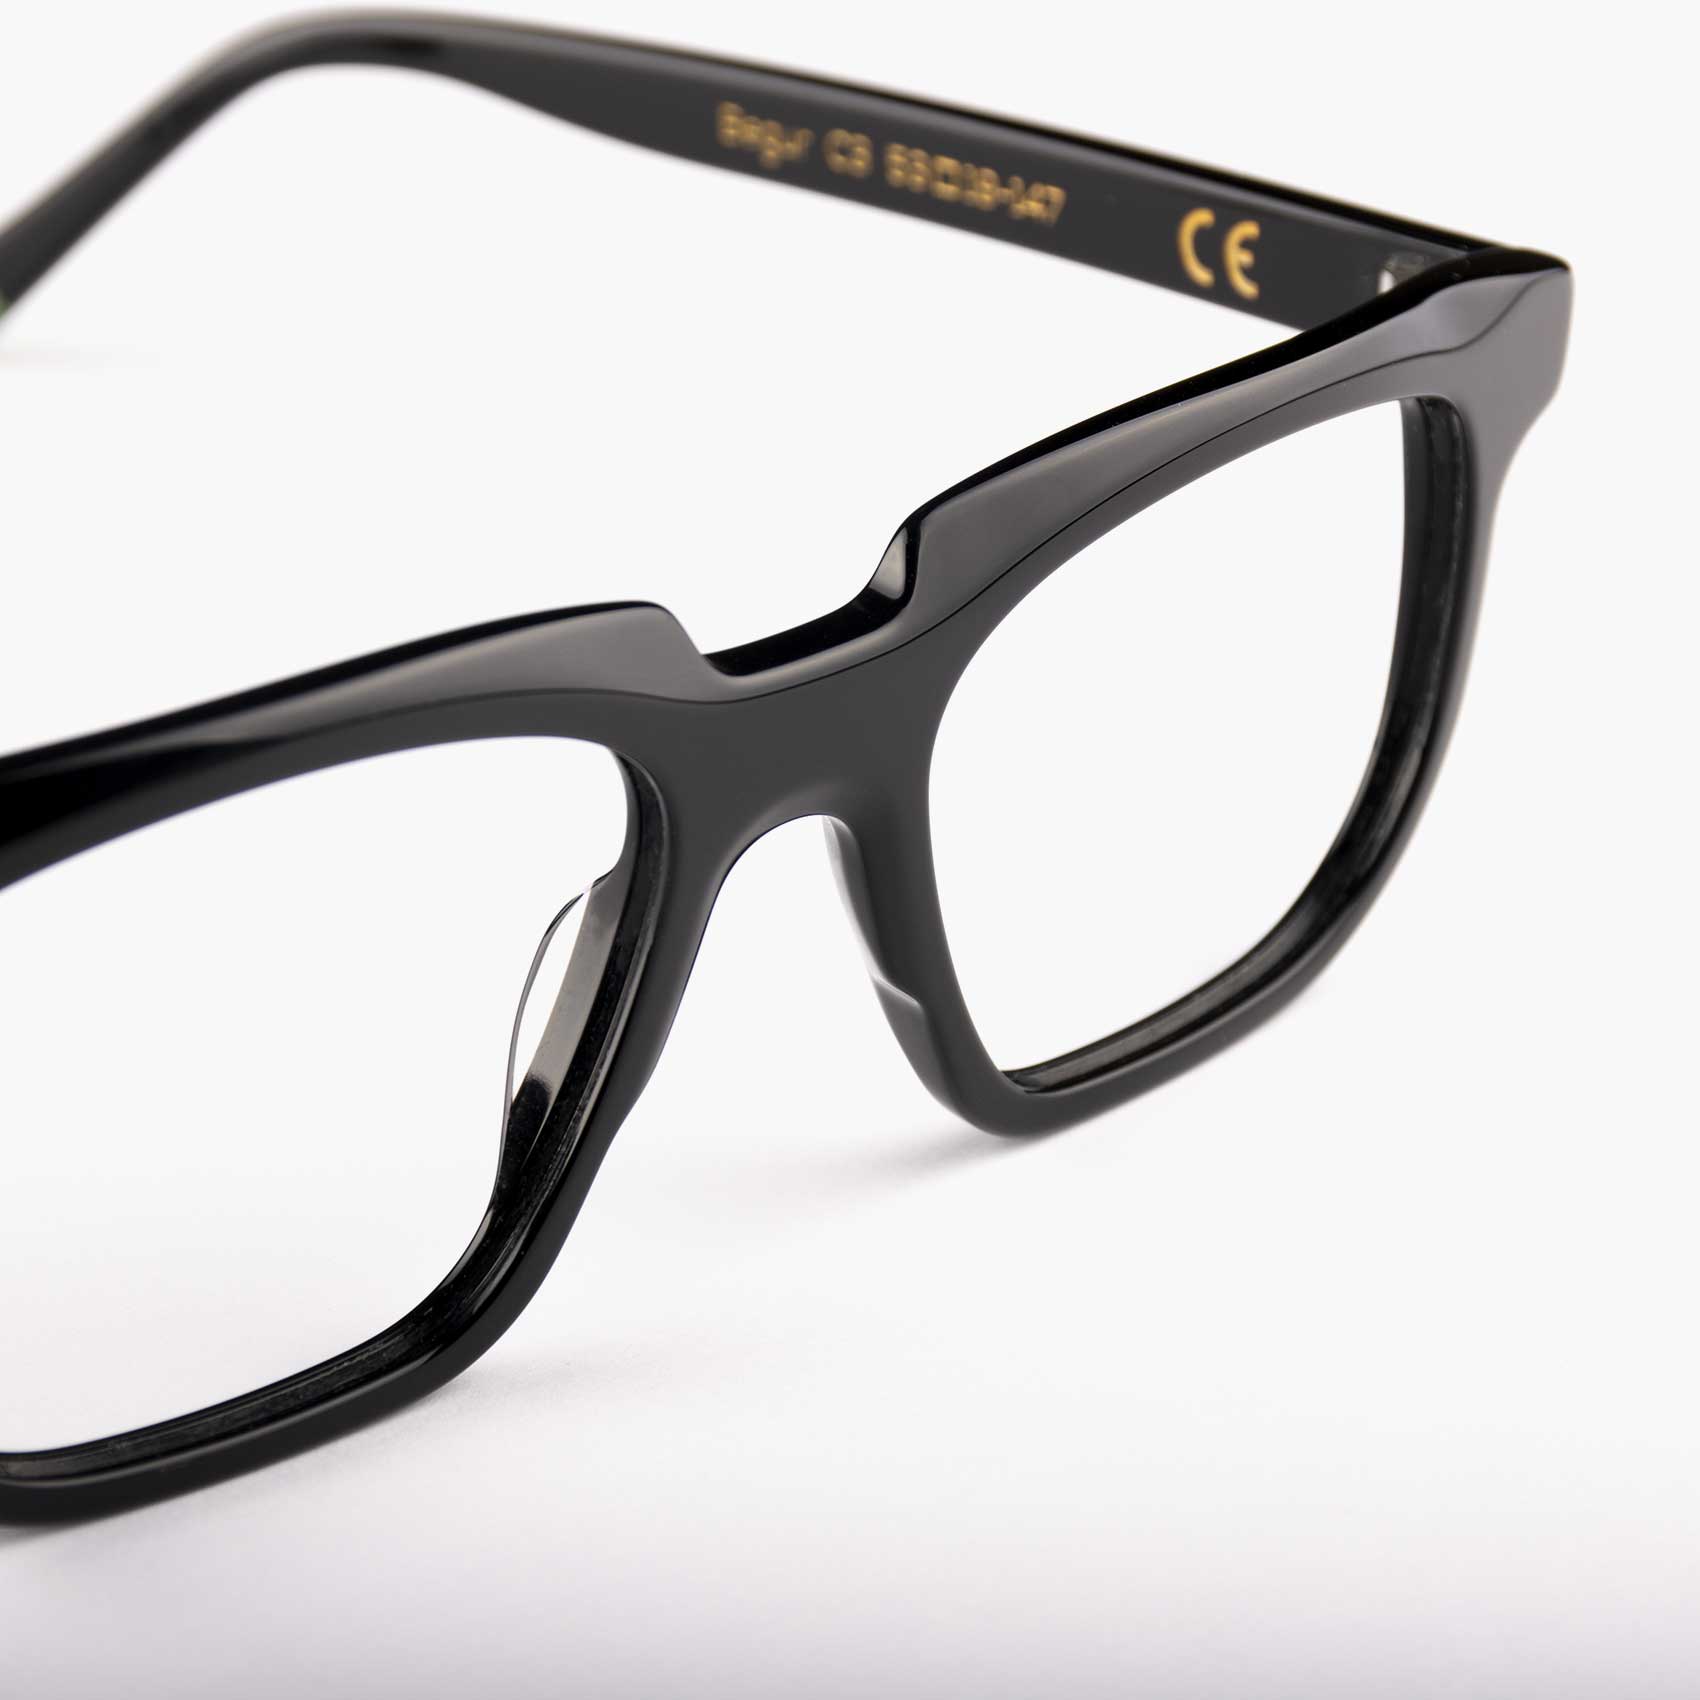 Detalle gafas con estilo personal modelo Begur de Proud Eyewear negras